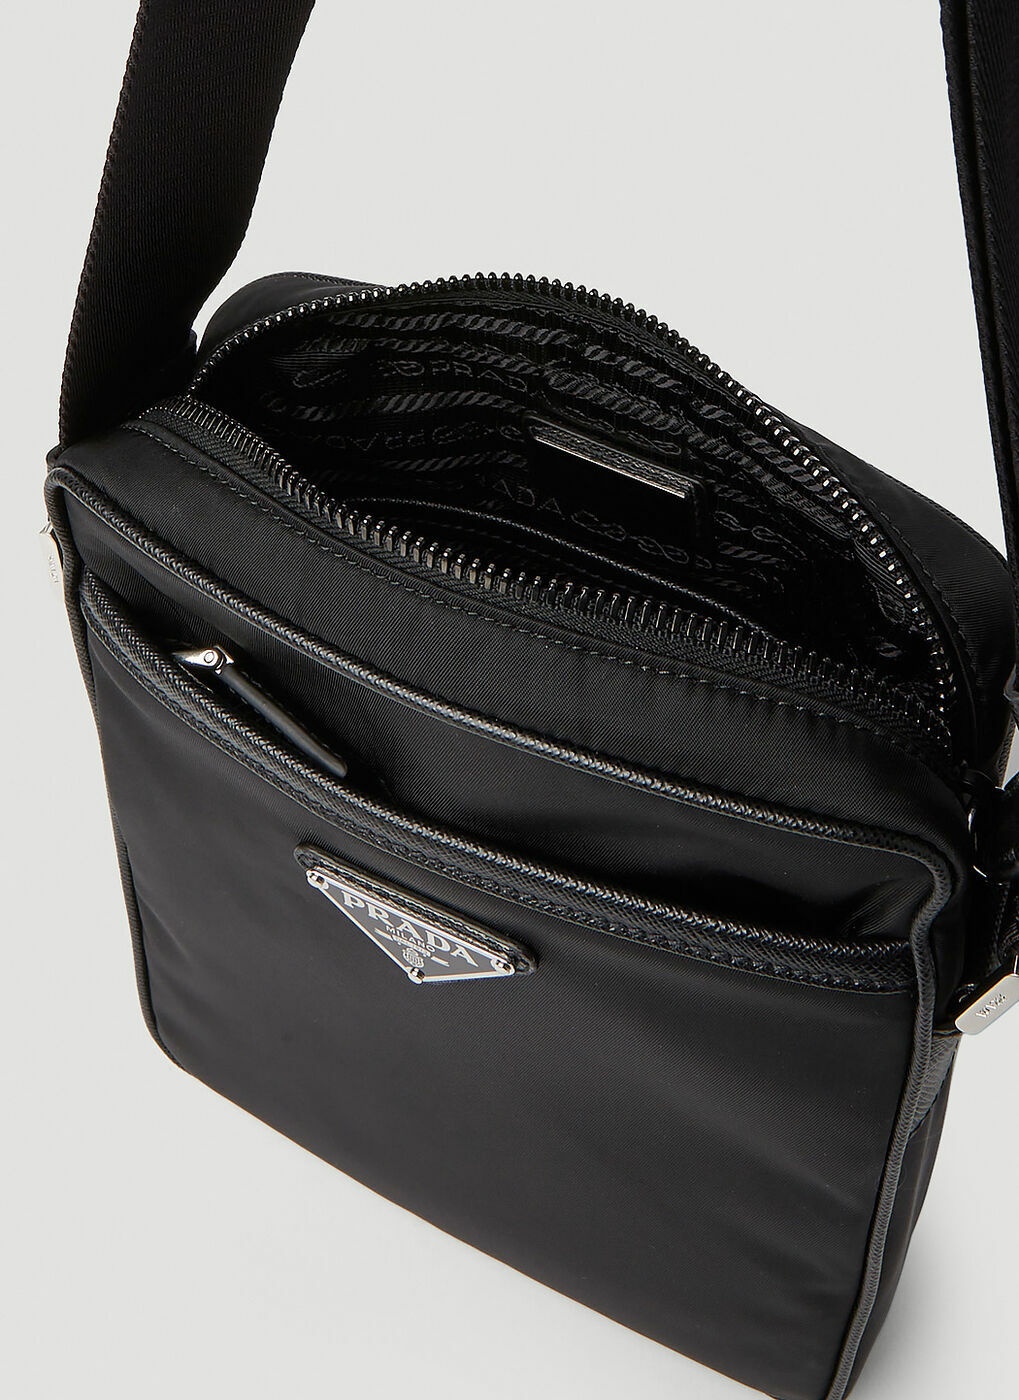 Black Re-Nylon Triangle cross-body bag, Prada